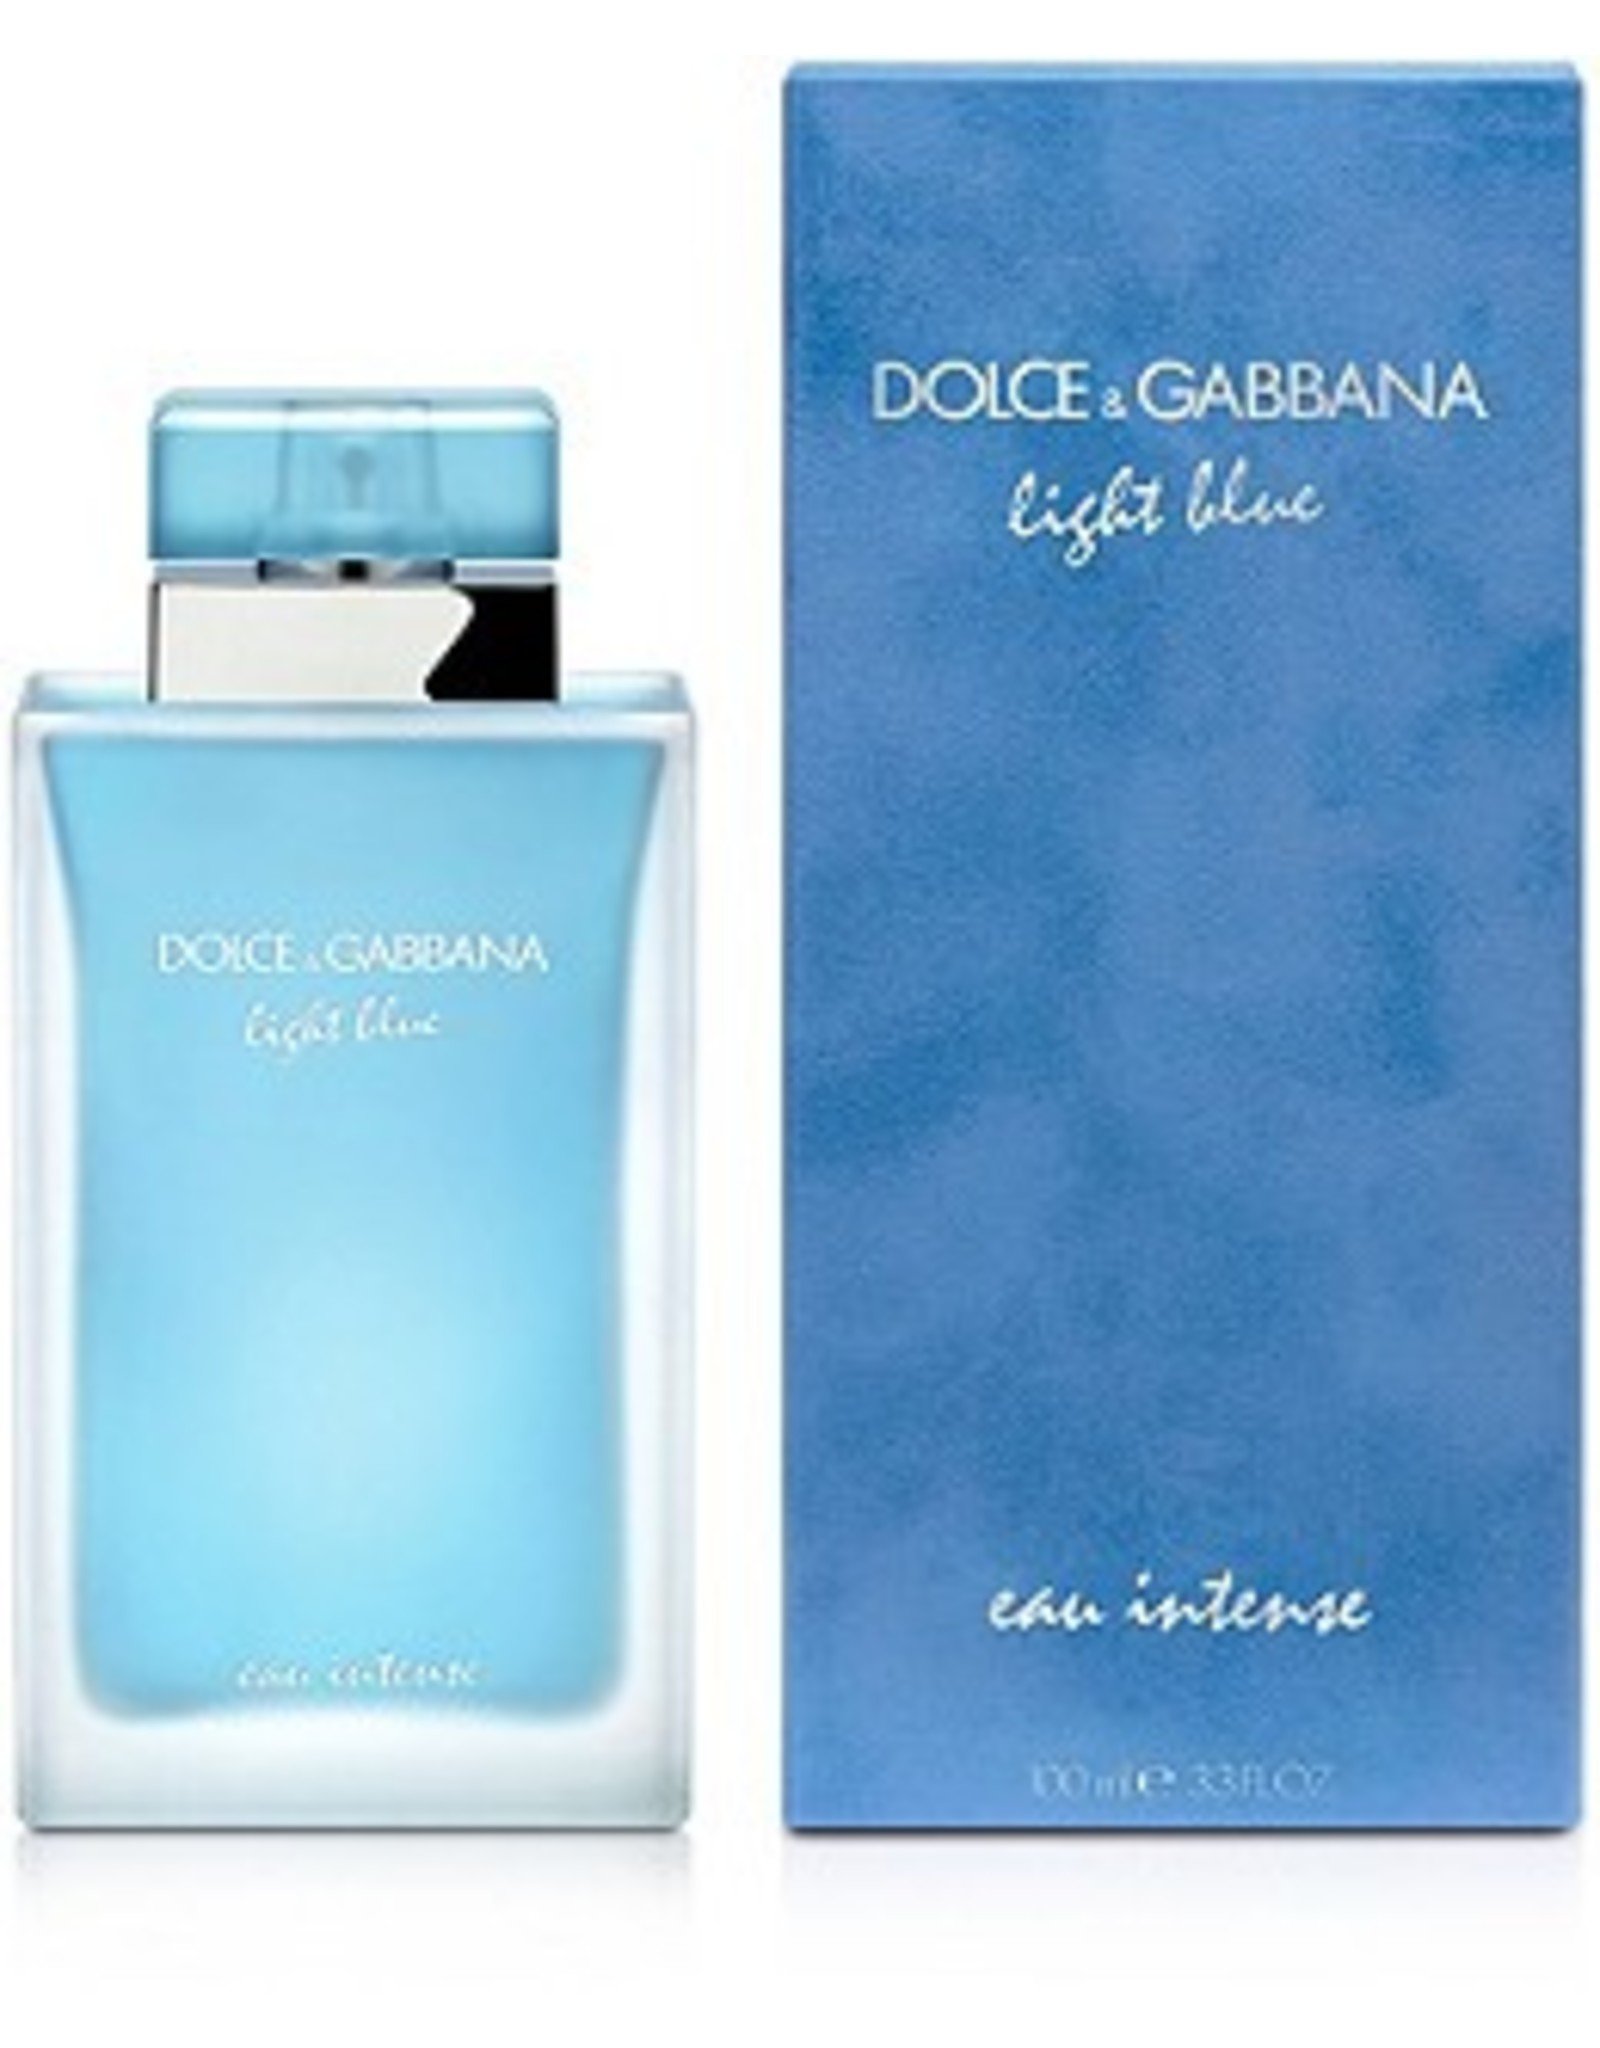 dolce and gabbana light blue box